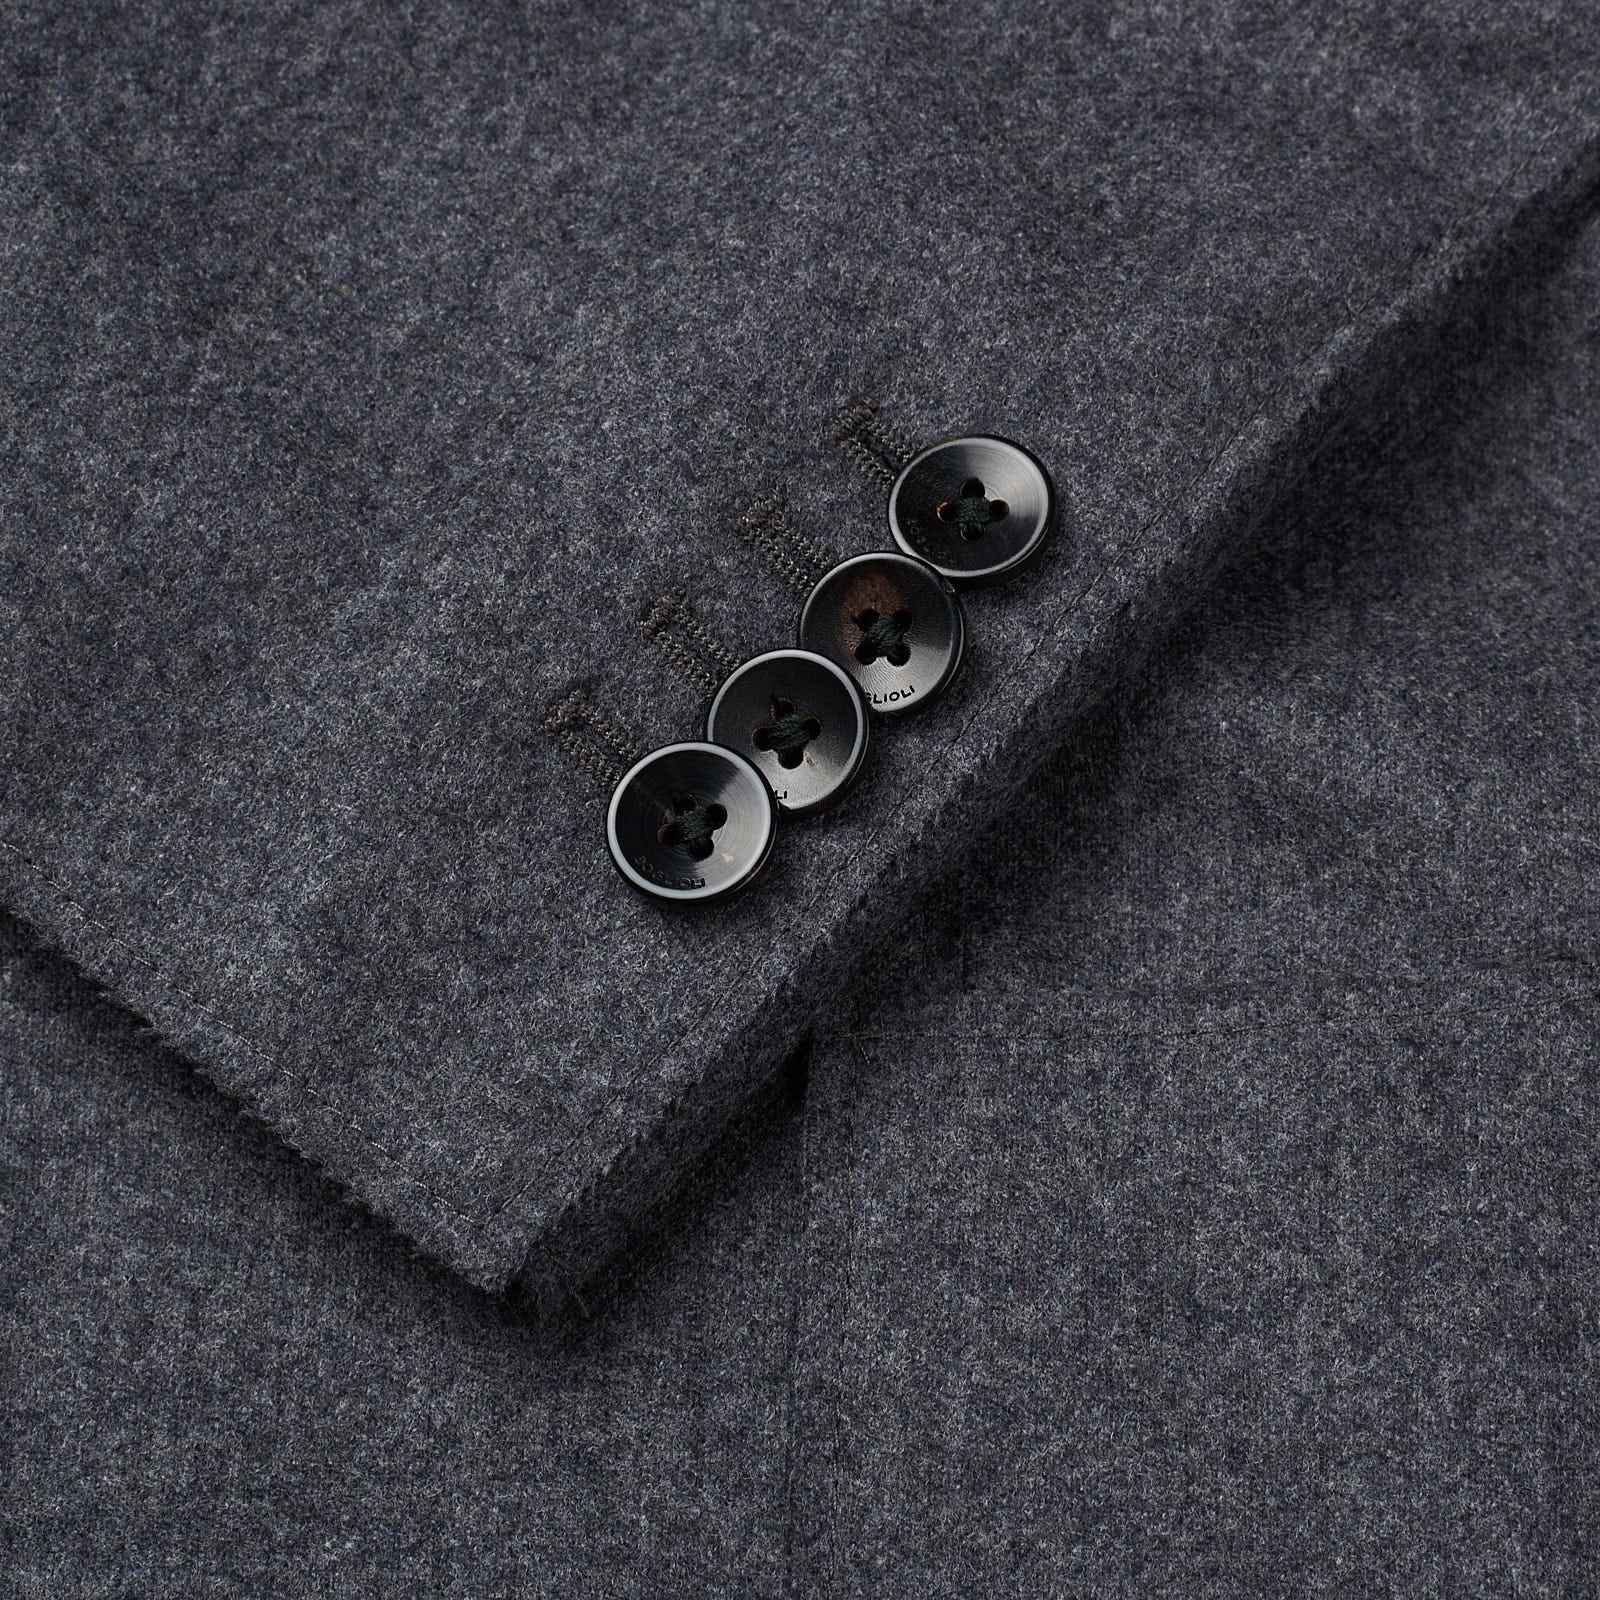 BOGLIOLI Milano "K.Jacket" Gray Virgin Wool Unlined Jacket EU 50 NEW US 40 BOGLIOLI